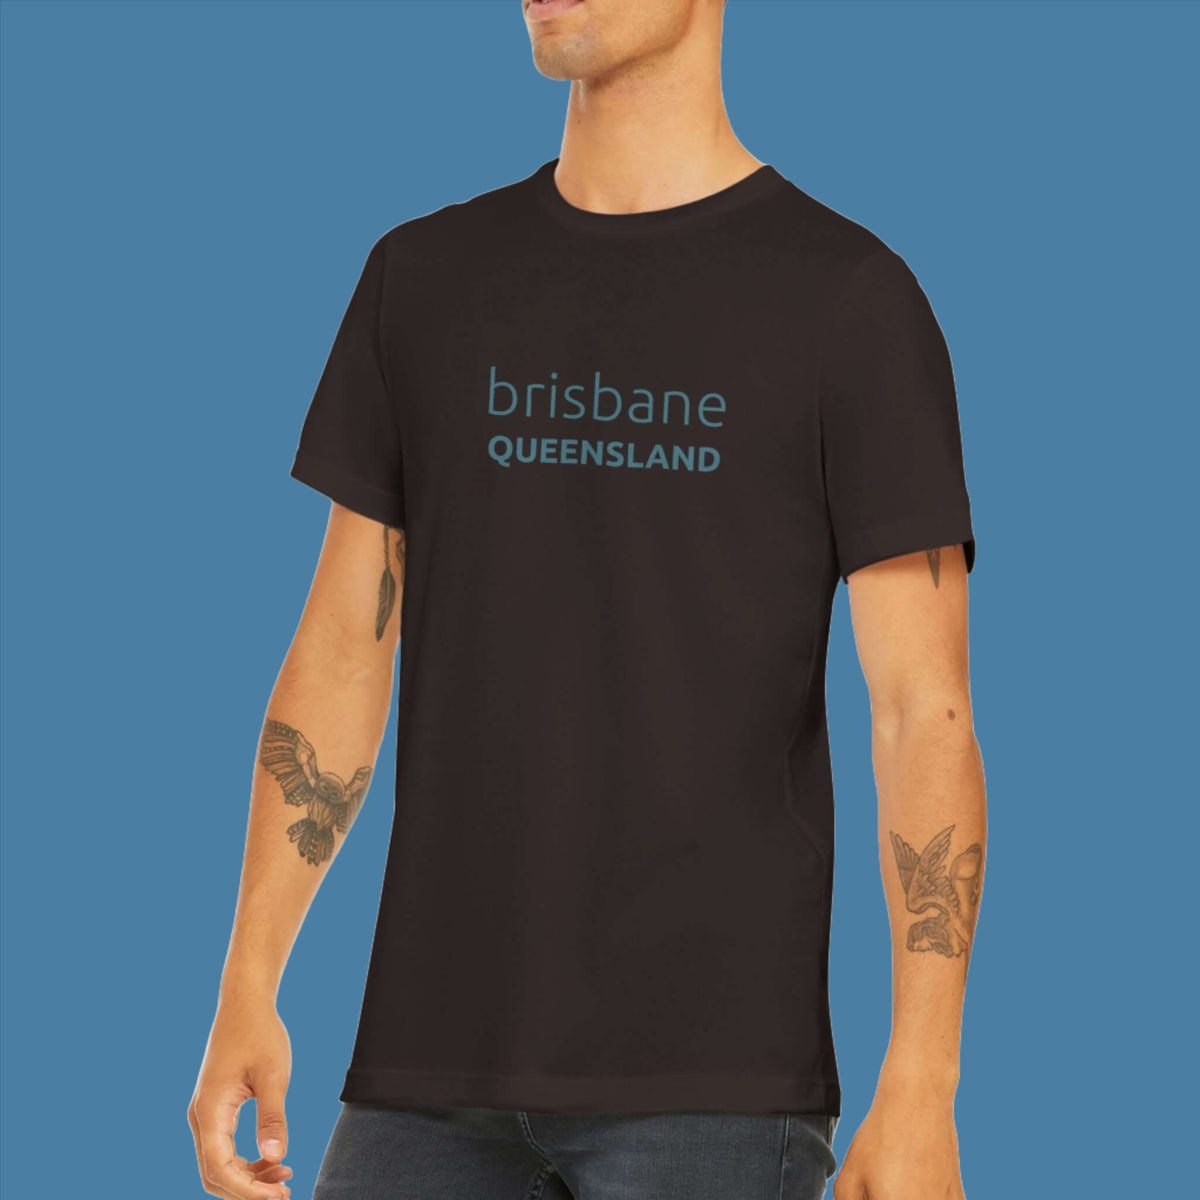 Mens Brisbane Queensland chocolate brown t shirt - MangoBap